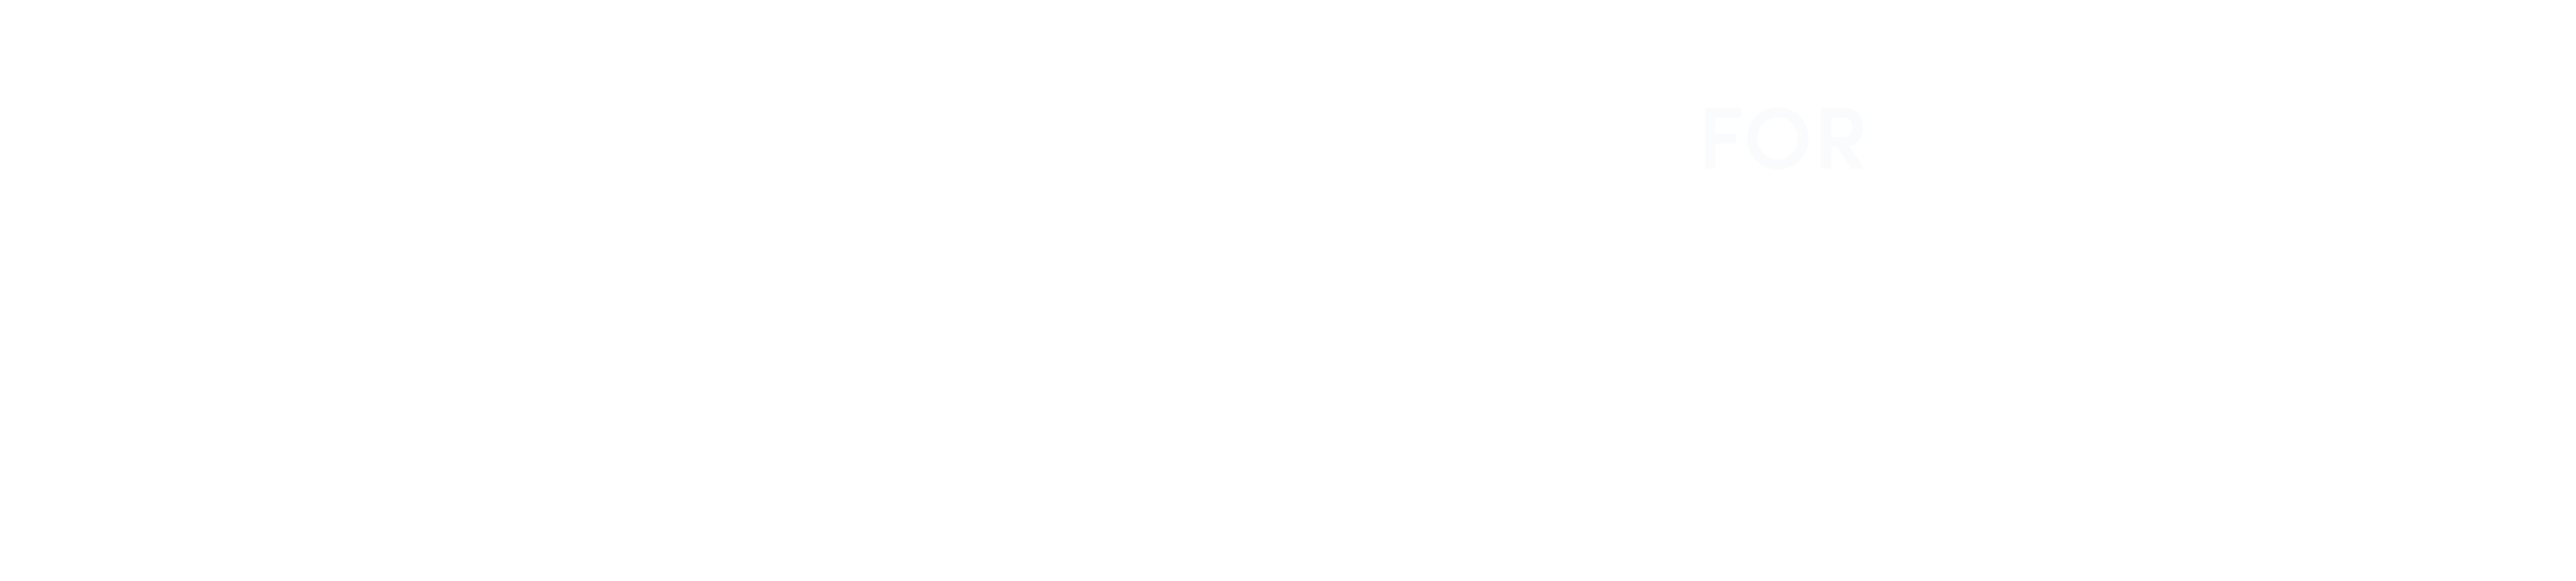 3LMasterofEngineering_TechLeadership2019.png logo